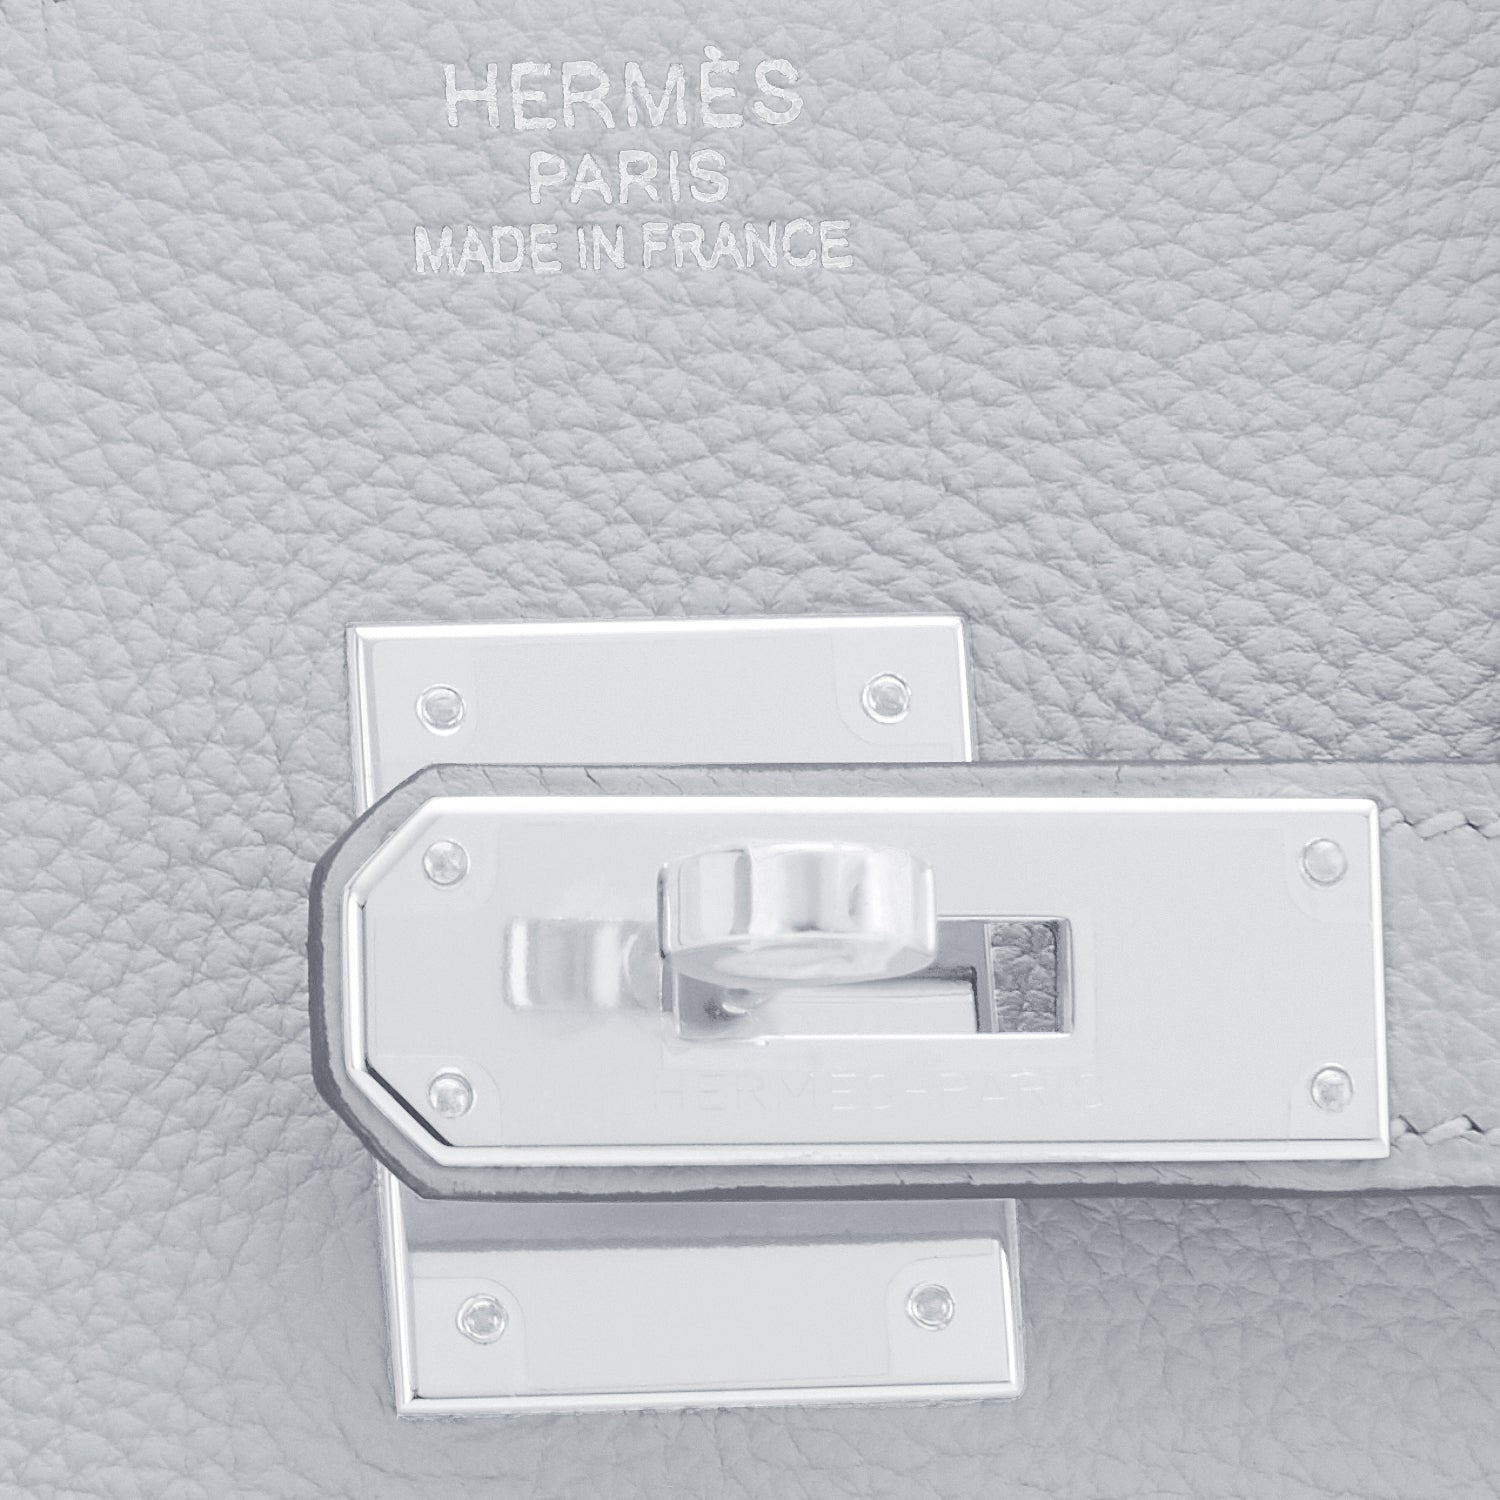 Hermes Blue Jean 35cm Birkin Leather Palladium Tote Satchel Chic and S -  Chicjoy